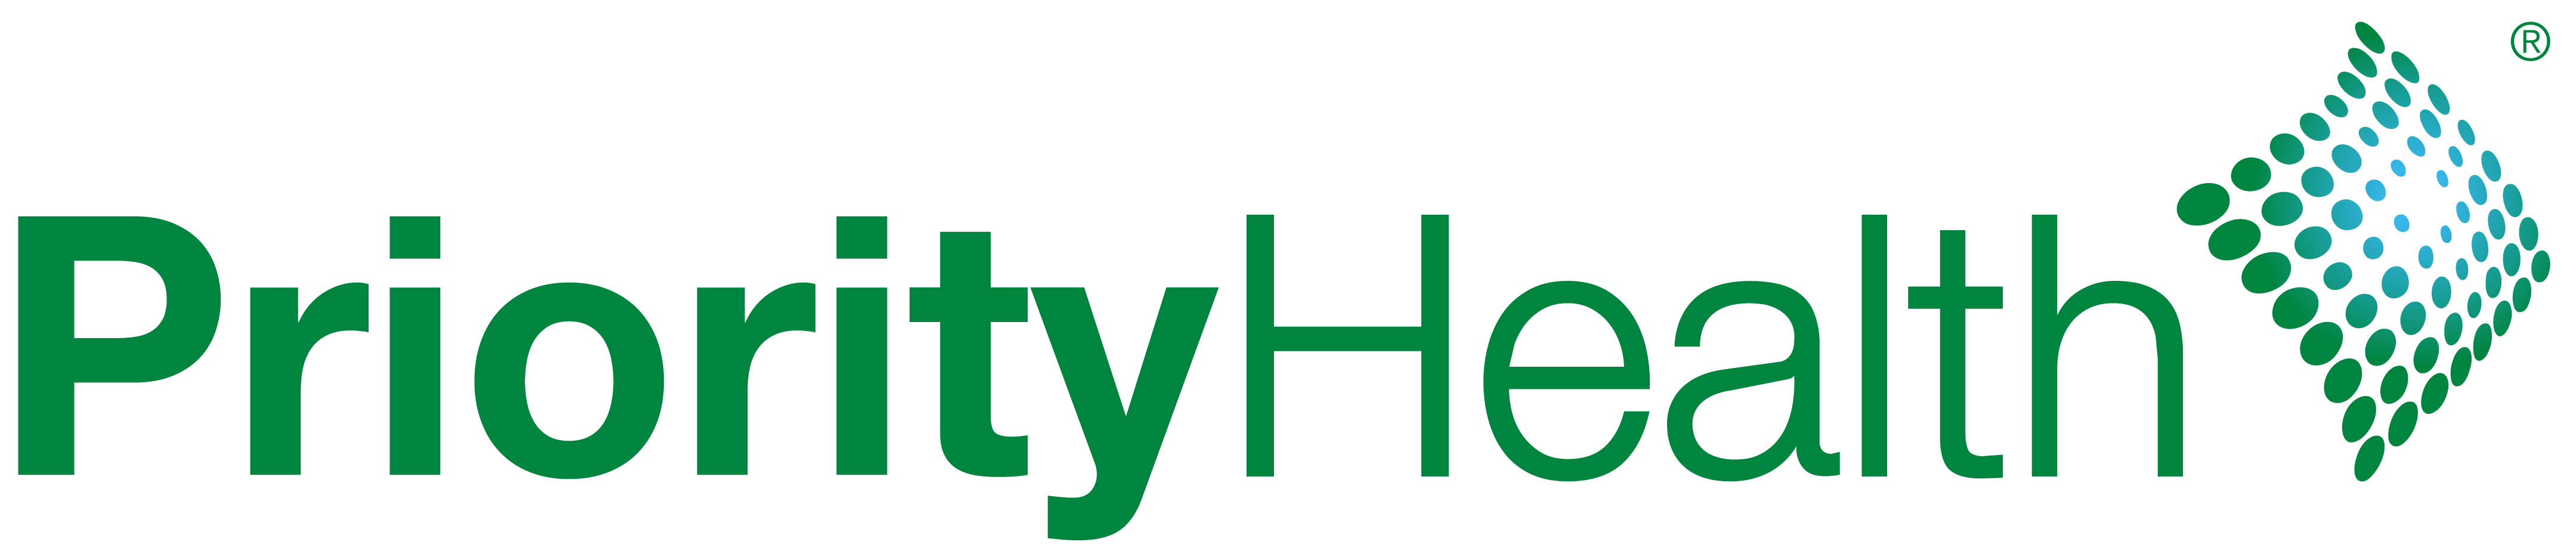 Priority Health company logo